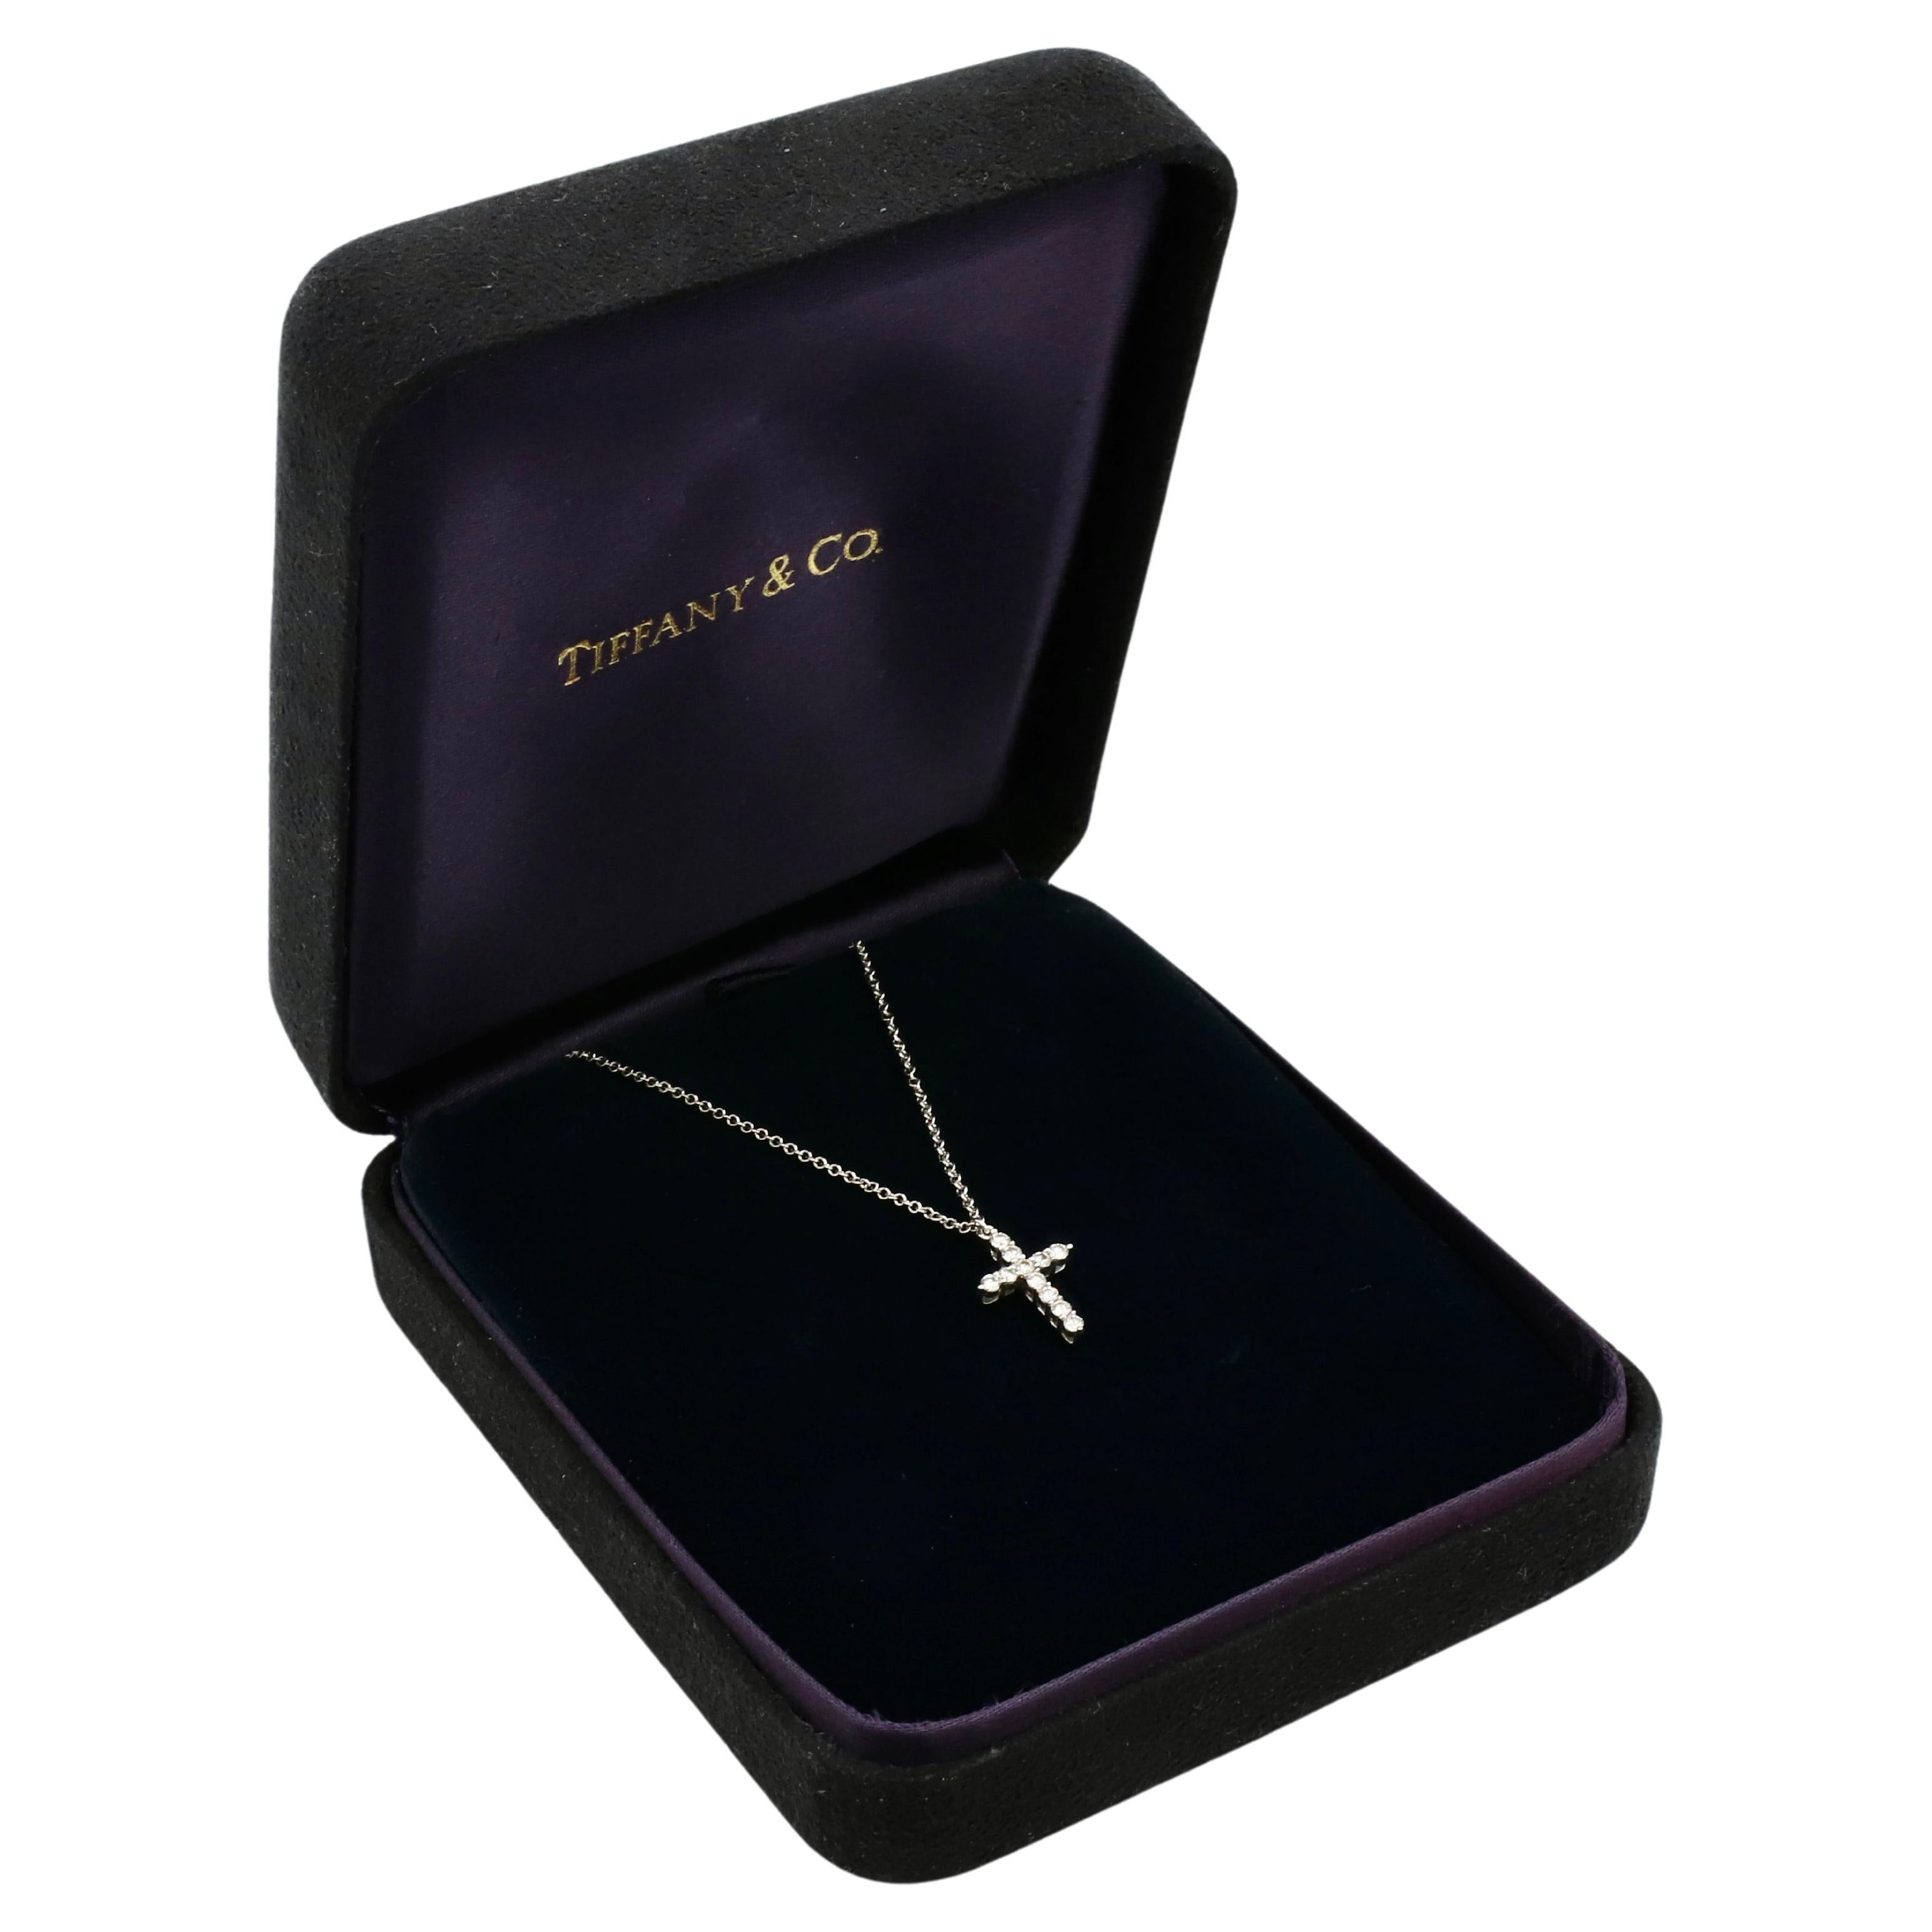 Tiffany & Co. Mini Natural Diamond Cross Pendant Necklace 
Metal: 18k white gold 
Diamonds: 0.21 CTW round F-G VS natural diamonds
Cross: 13.5 x 10mm
Chain: 20 inches
Weight: 2.48 grams
Signed: ©Tiffany & Co. Au750
Retail: $2500 USD (platinum